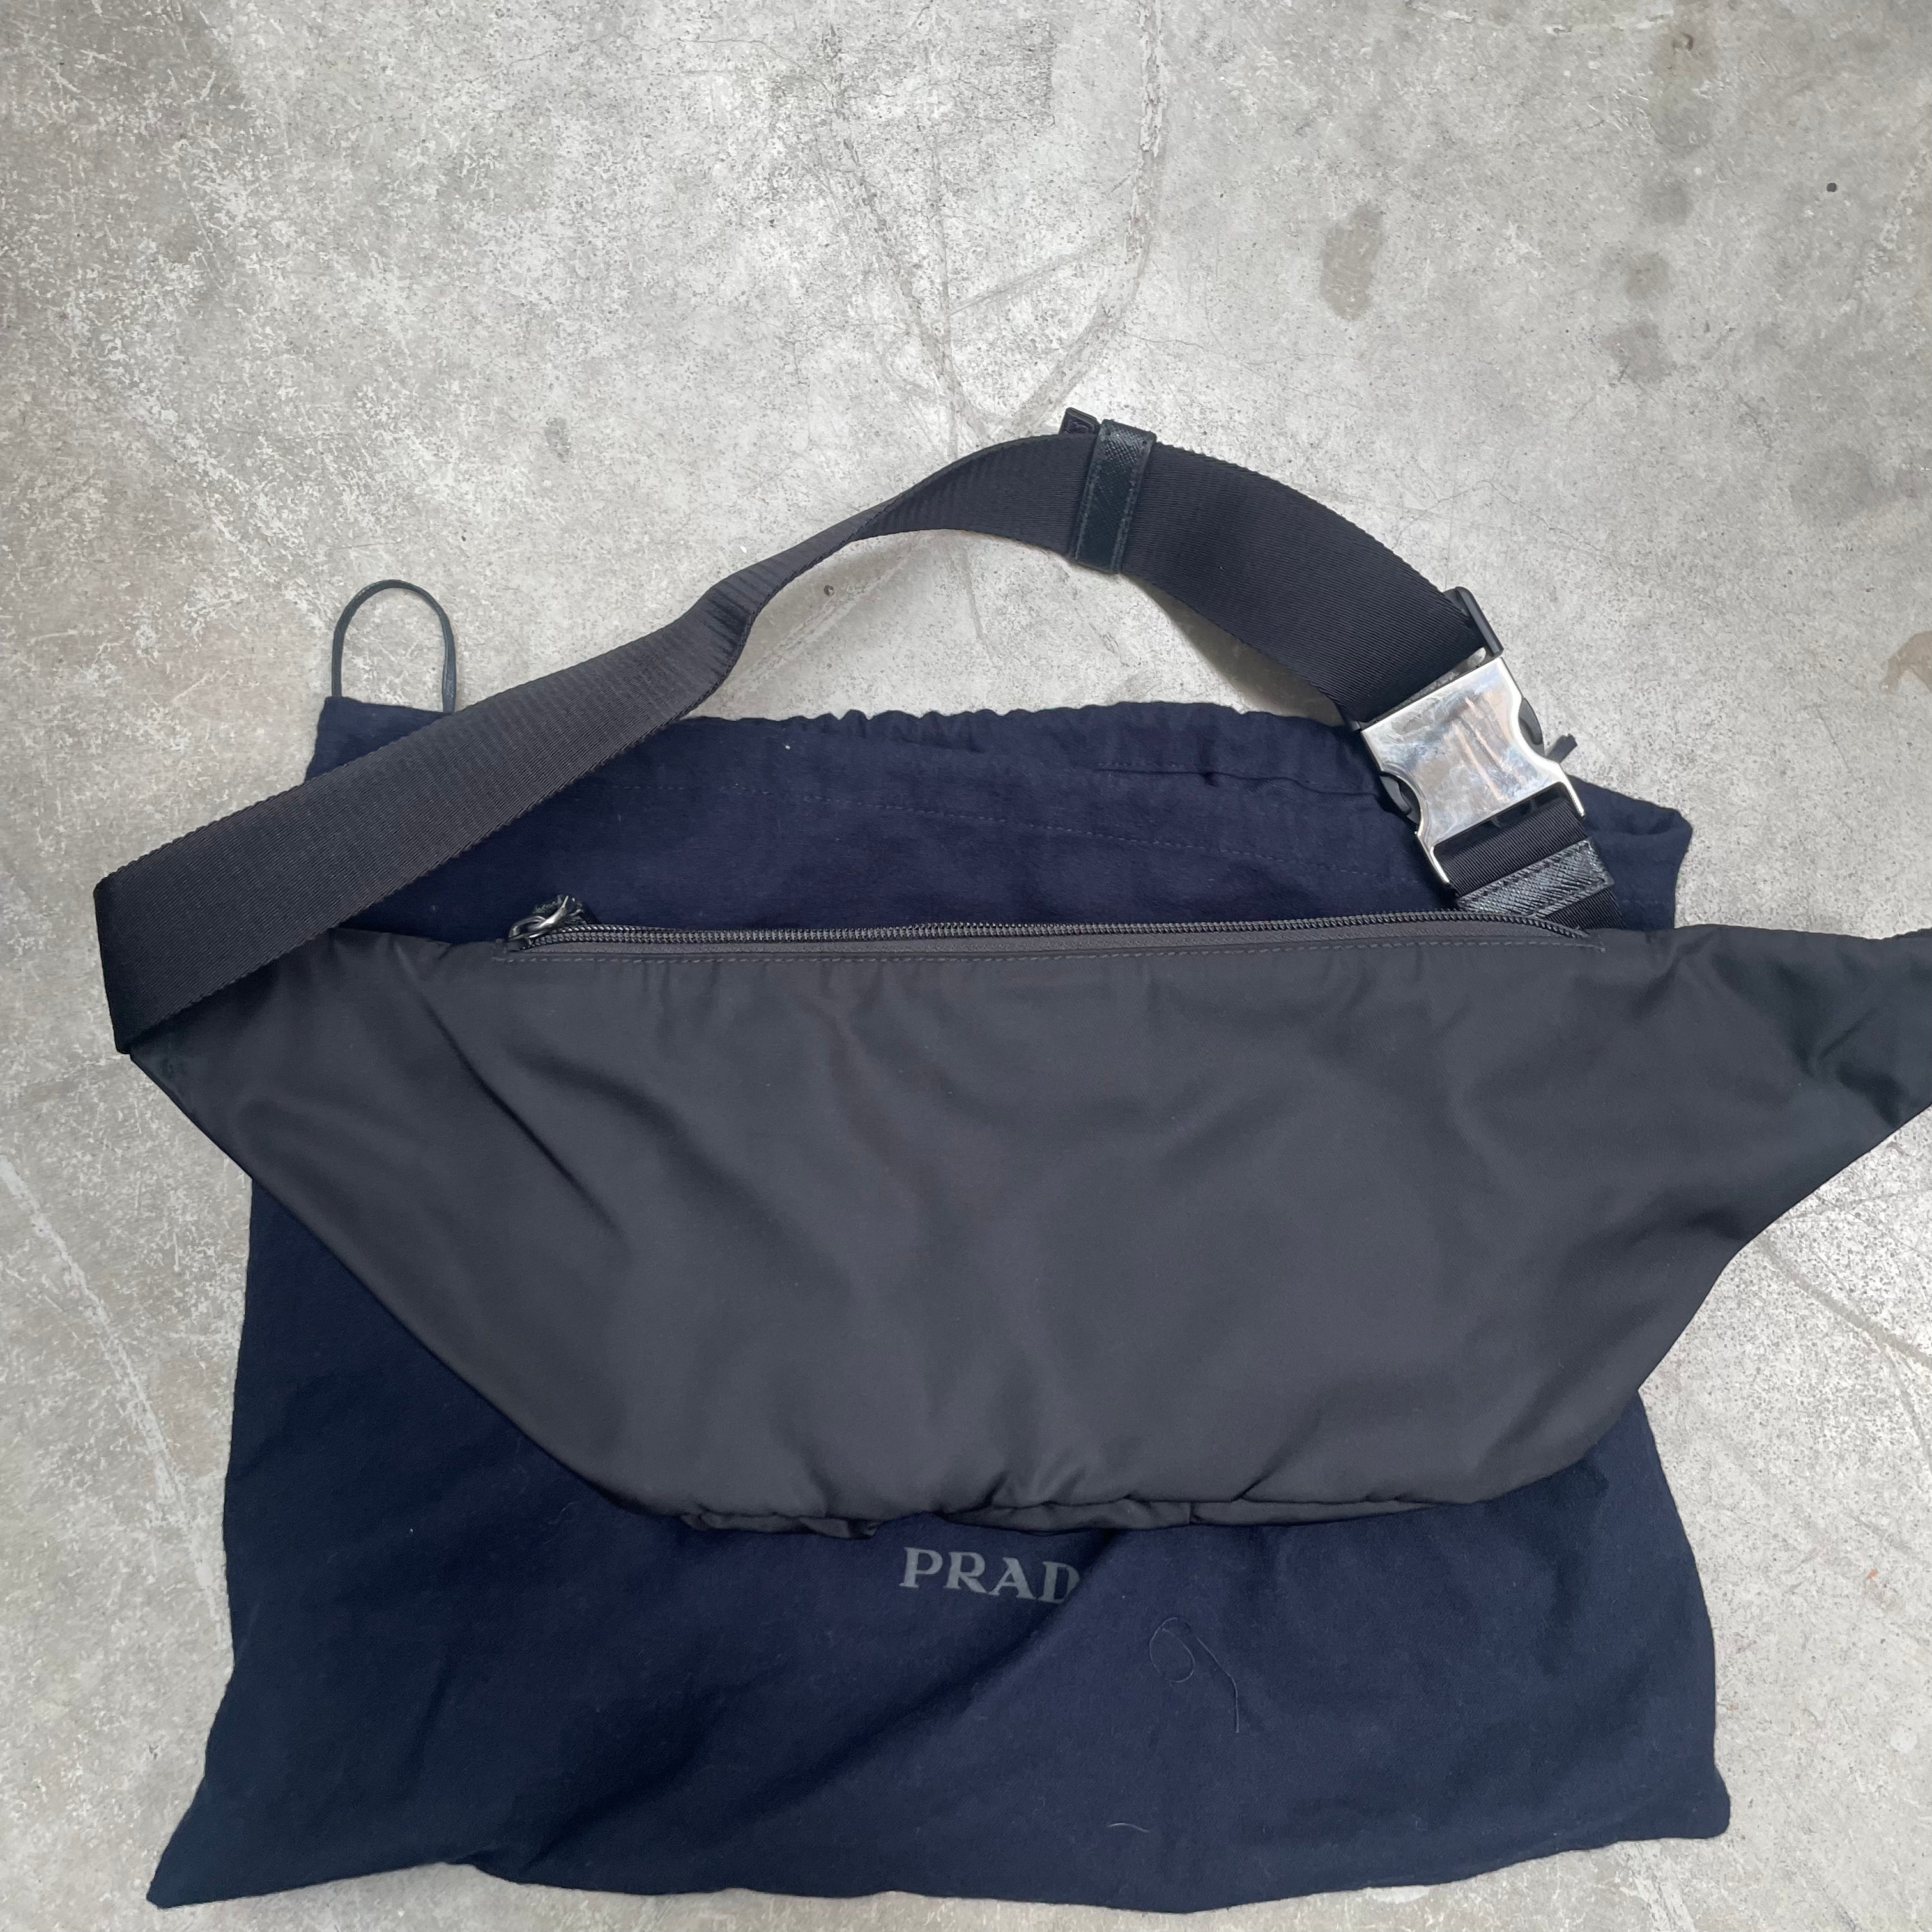 Prada Nylon and Saffiano Leather Belt / Bum Bag